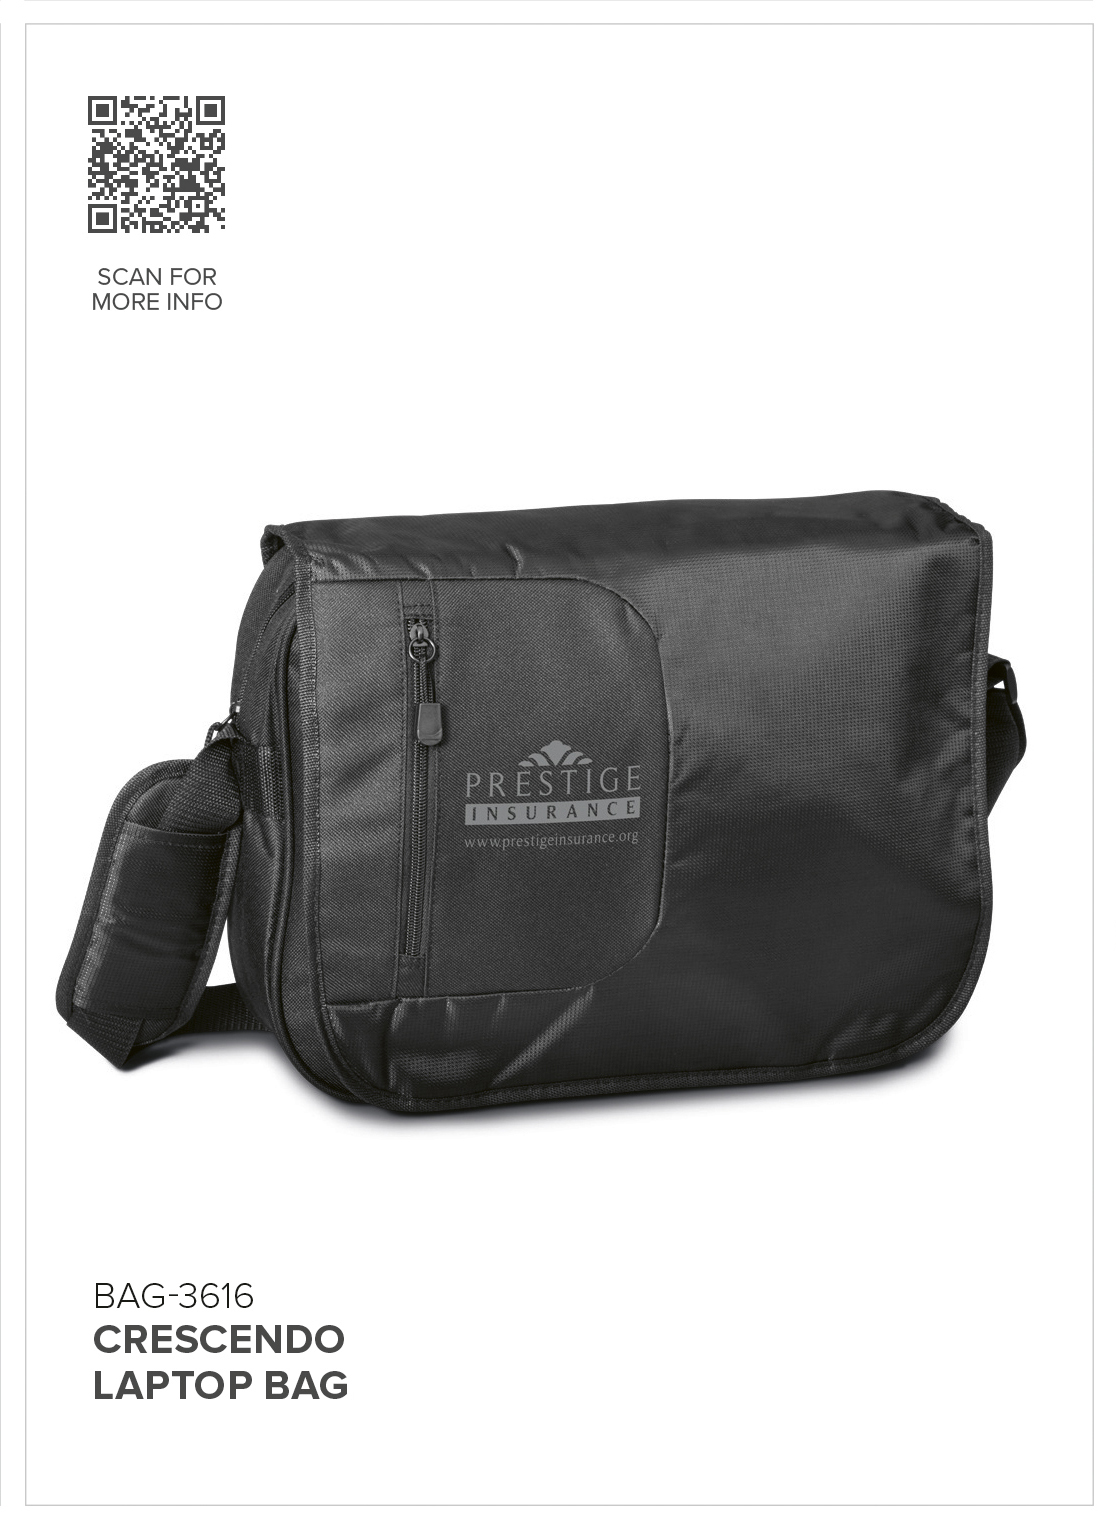 BAG-3616 - Crescendo Laptop Bag - Catalogue Image